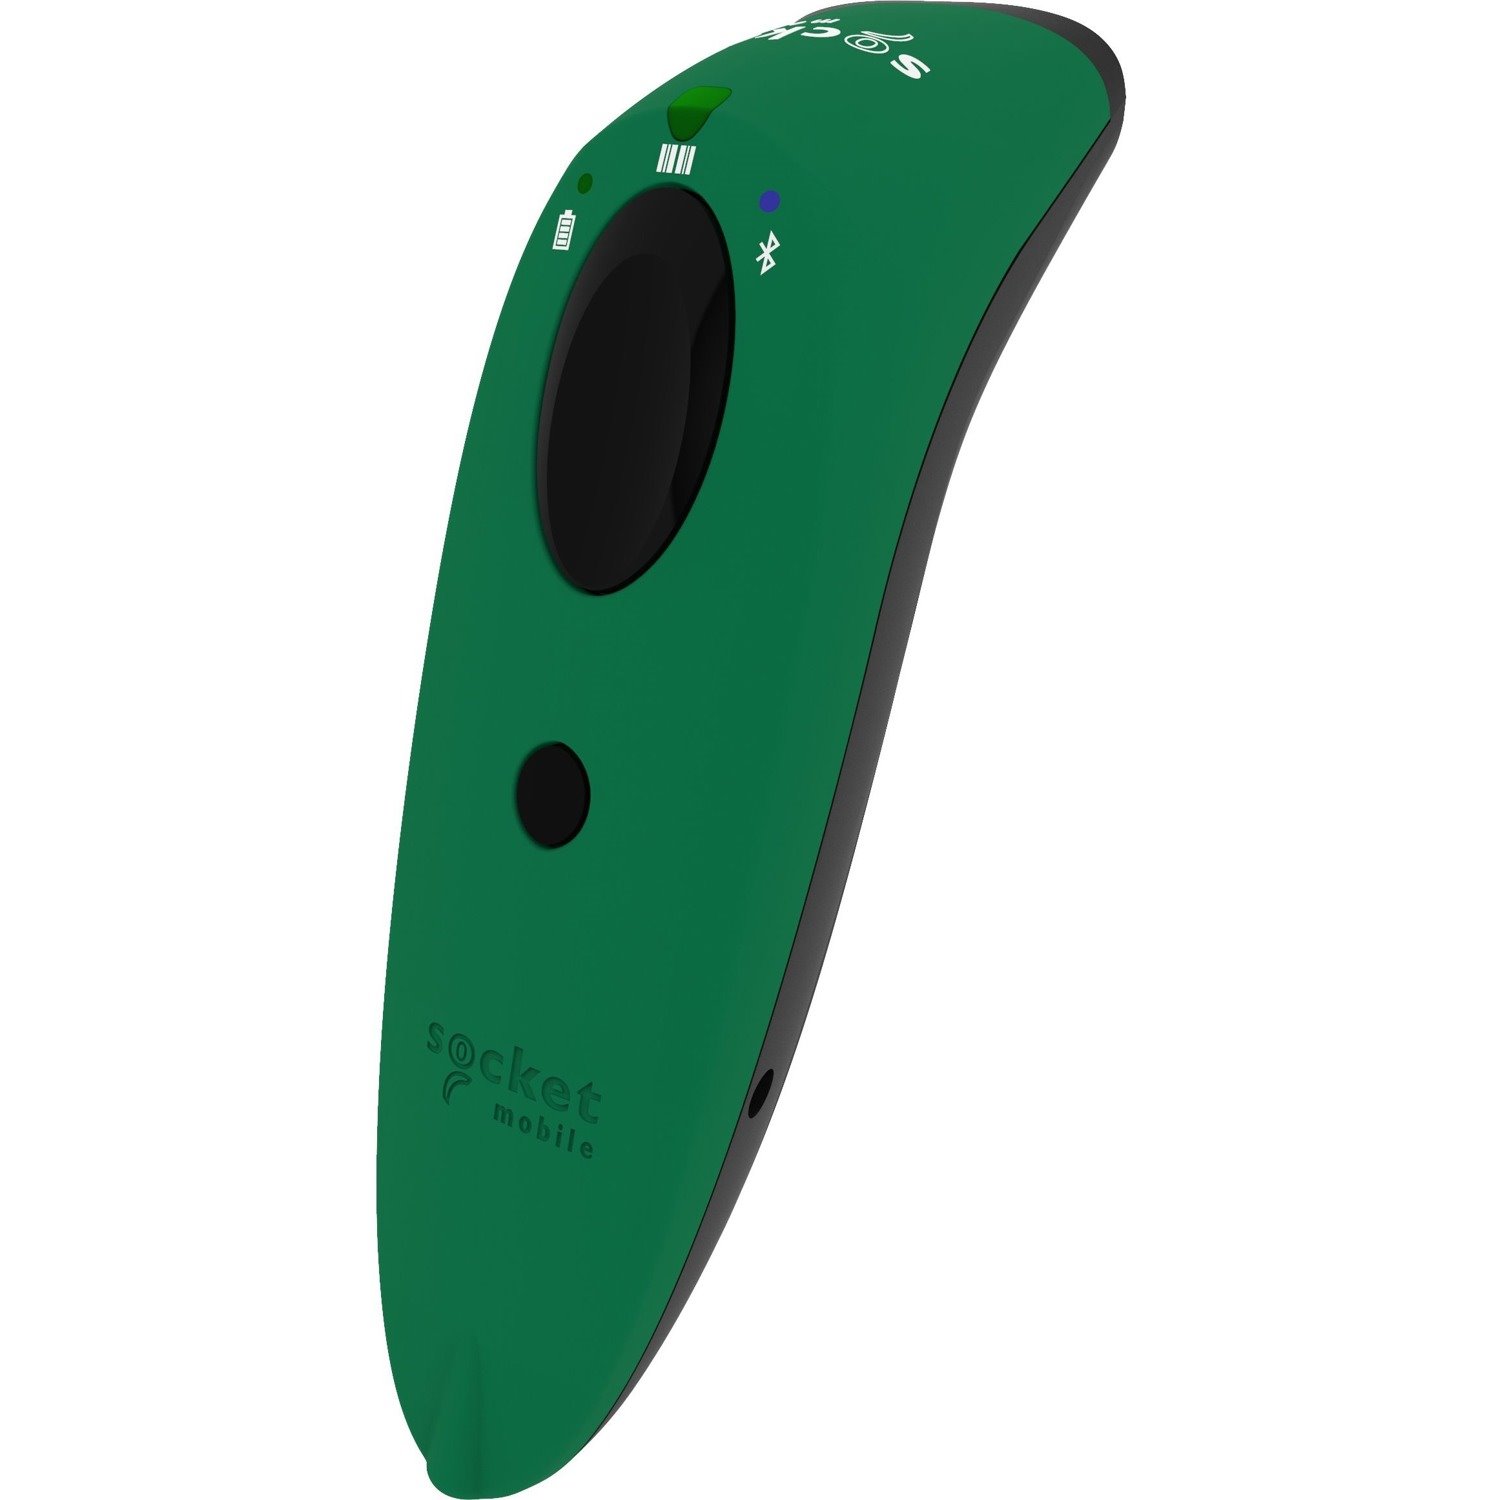 Socket Mobile SocketScan S720 Handheld Barcode Scanner - Wireless Connectivity - Green